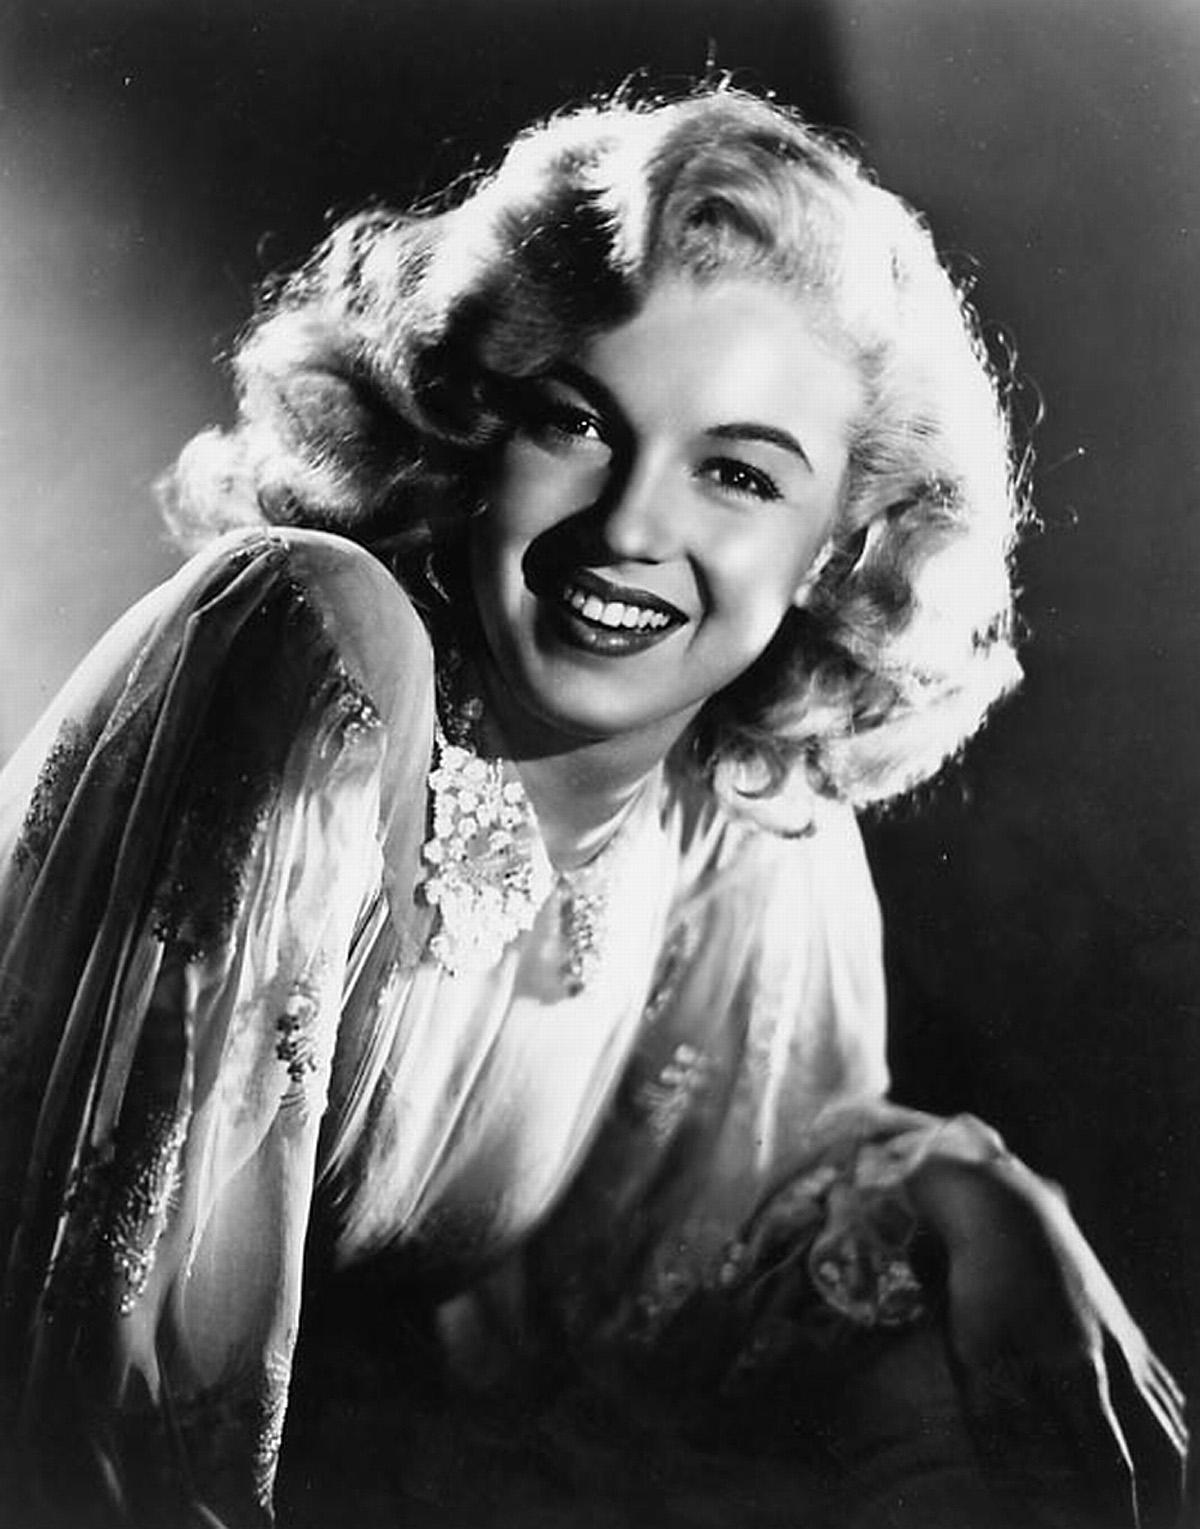 Marilyn Monroe photo 1608 of 2137 pics, wallpaper - photo #421829 ...